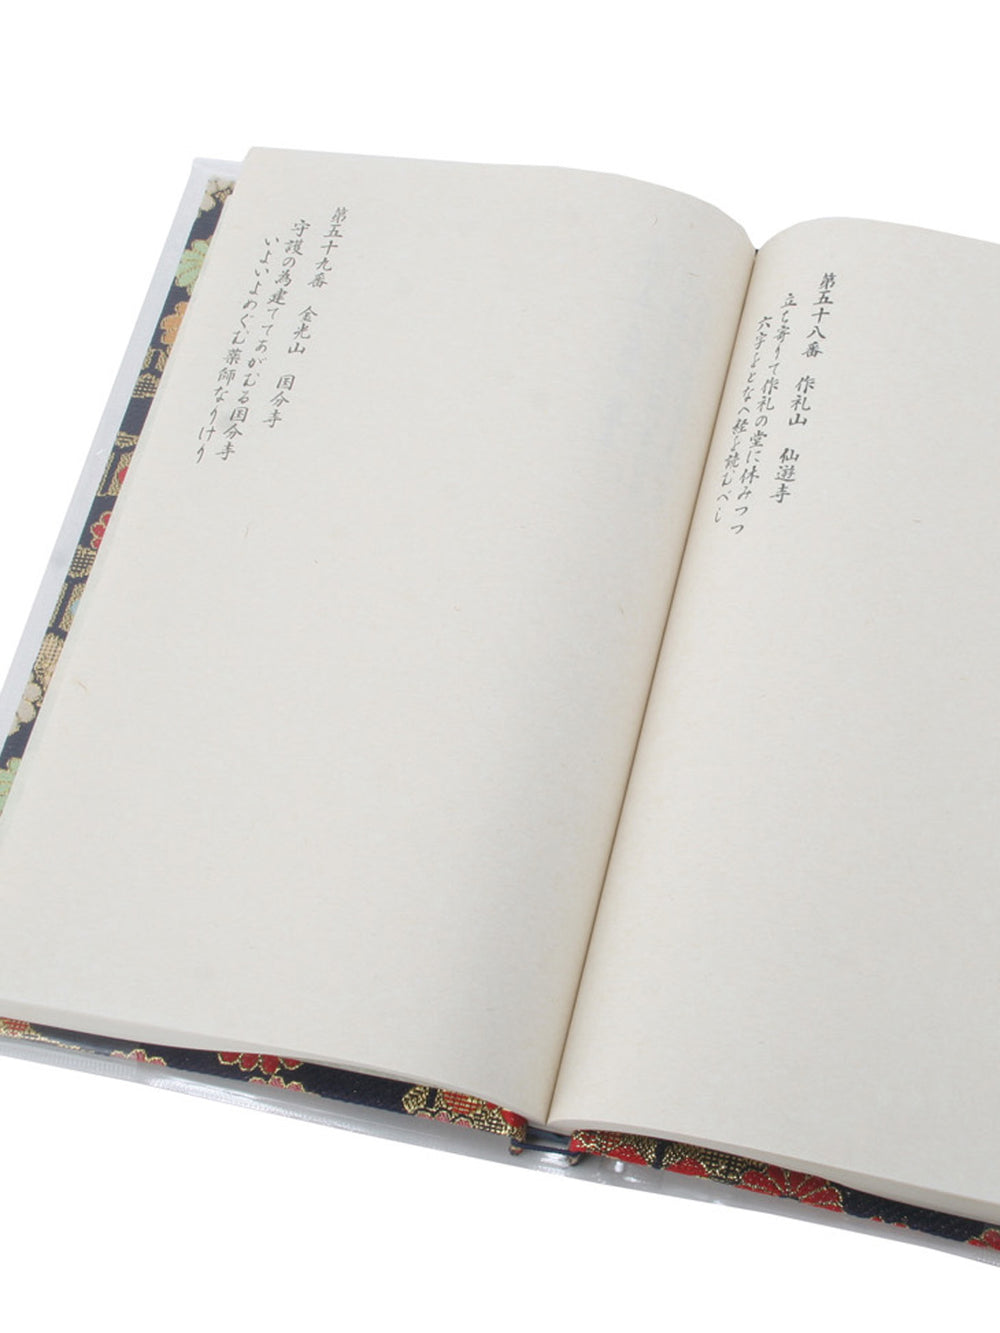 Nōkyō-chō(stamp book) - Chrysanthemum Red